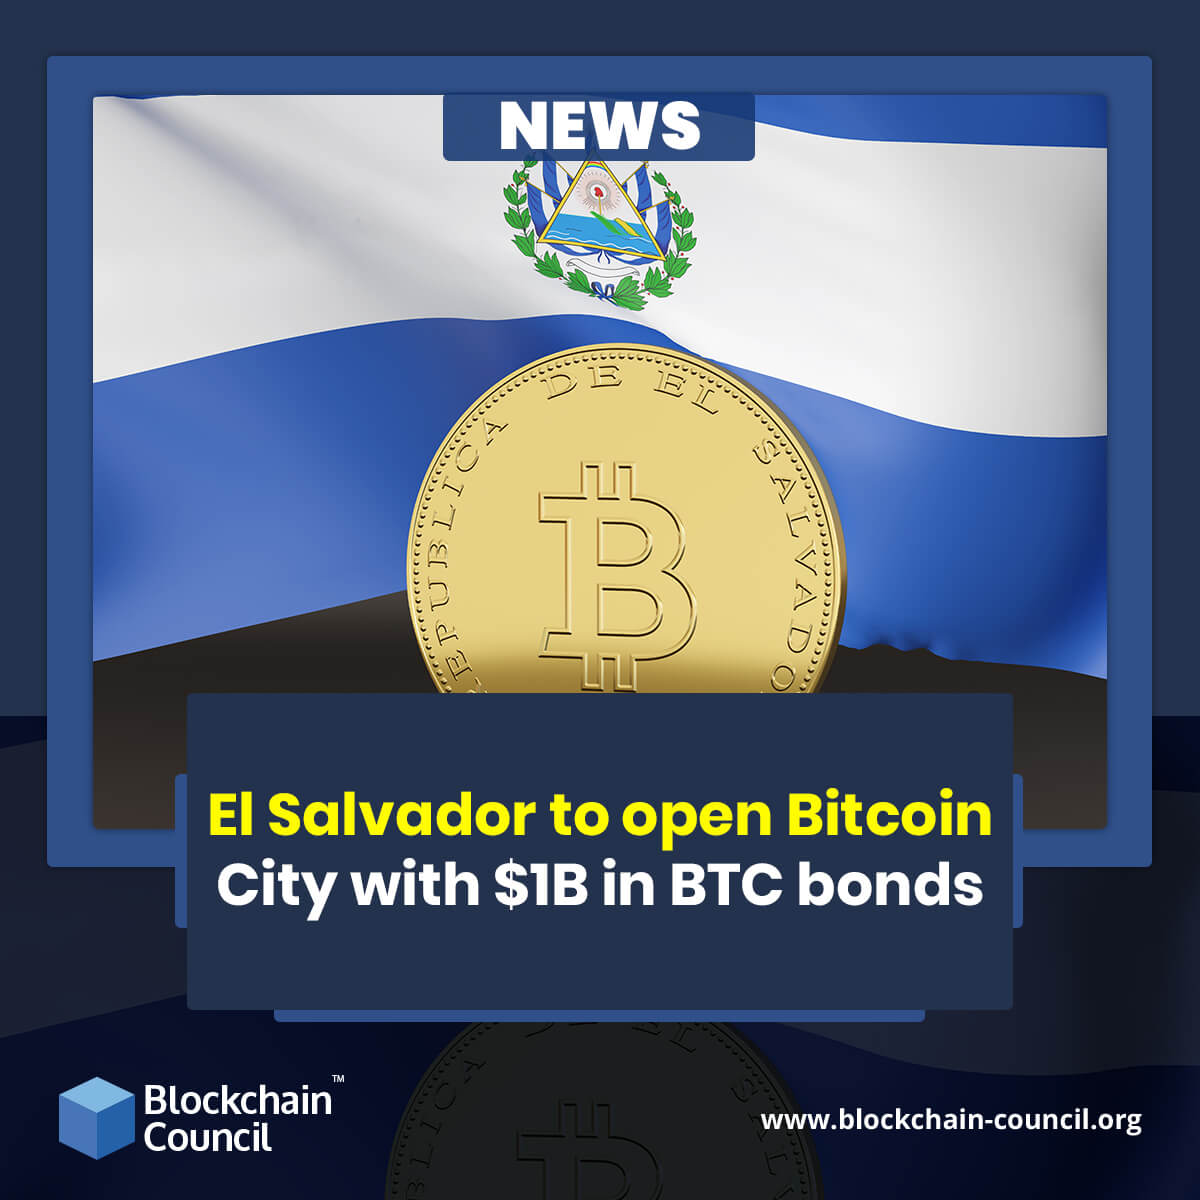 El Salvador to open Bitcoin City with $1B in BTC bonds